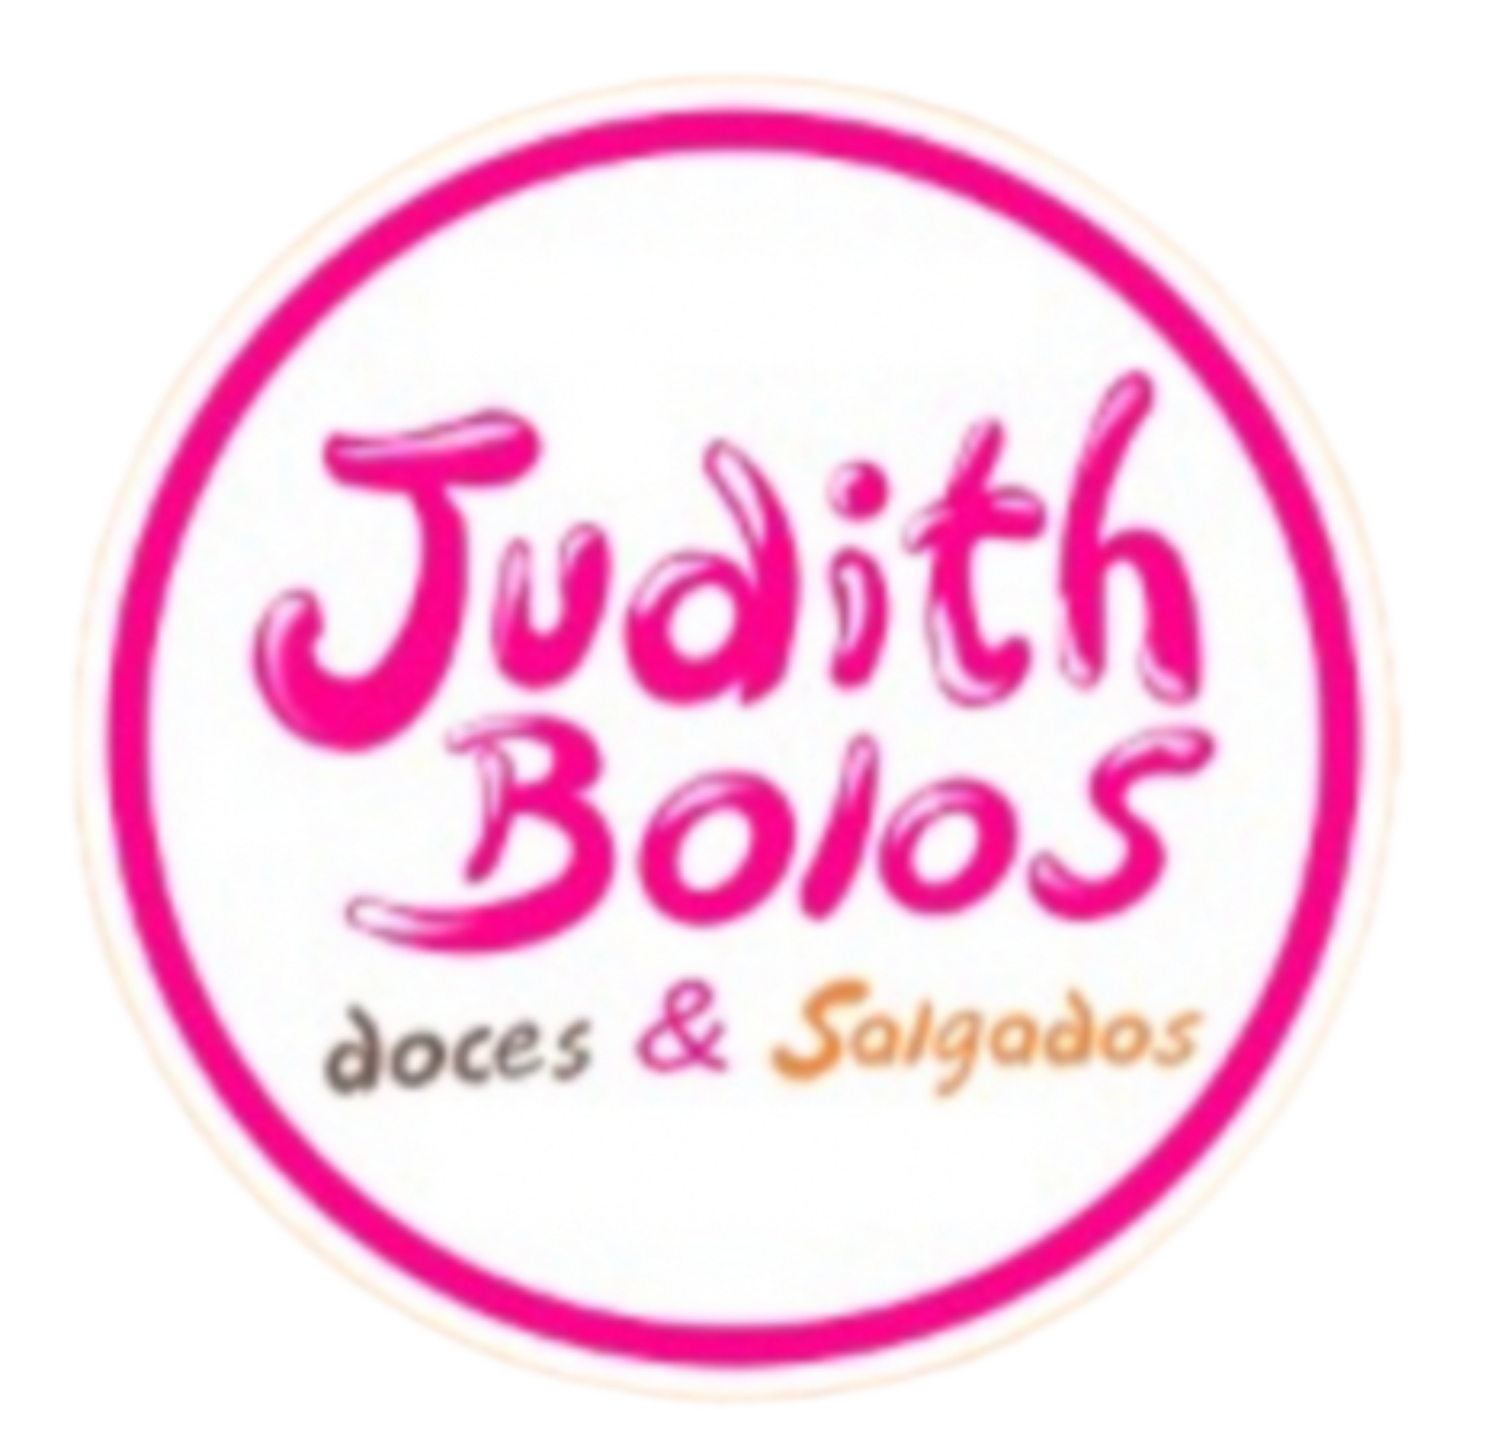 Judith Bolos